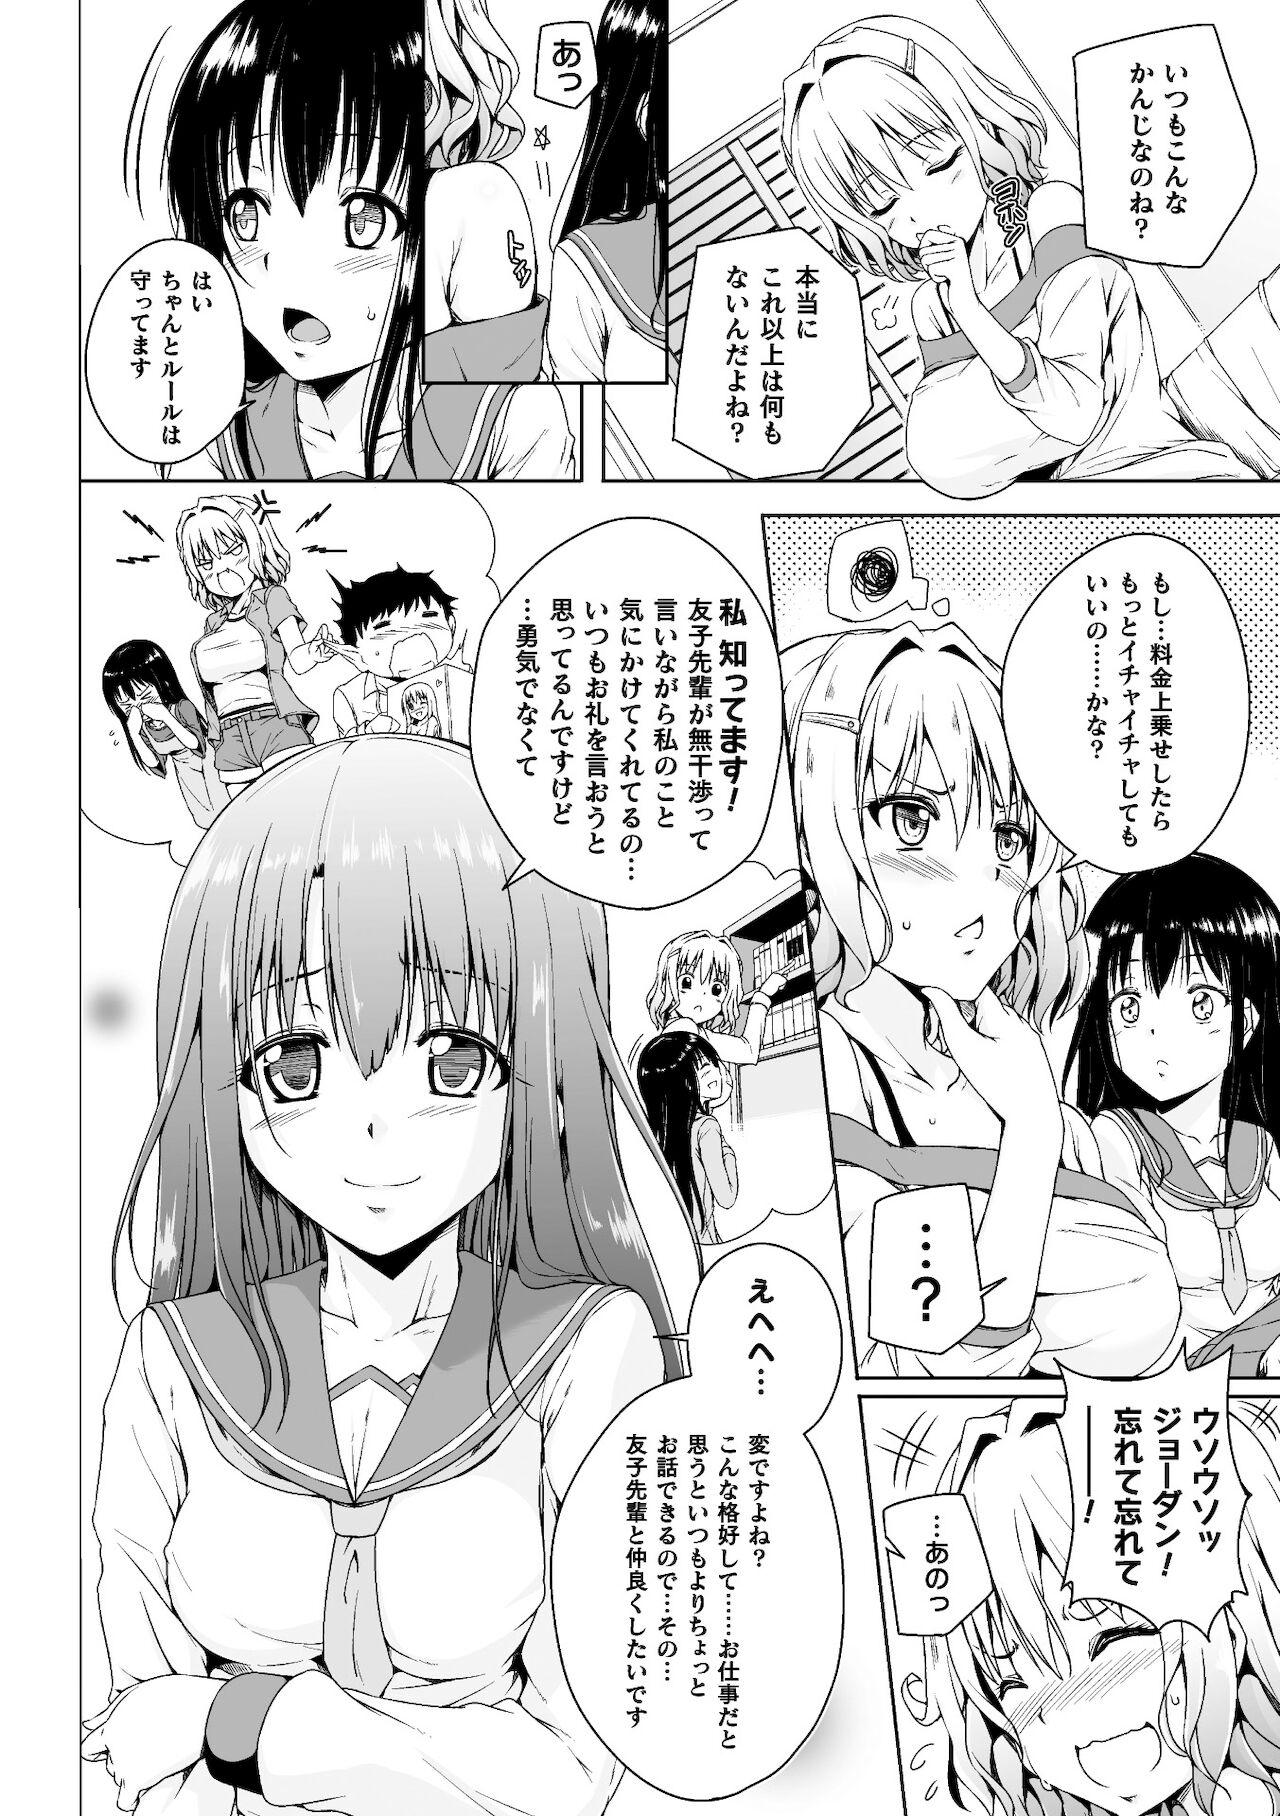 Hot Teen 2D Comic Magazine Mamakatsu Yuri Ecchi Vol. 2 Girl - Page 8